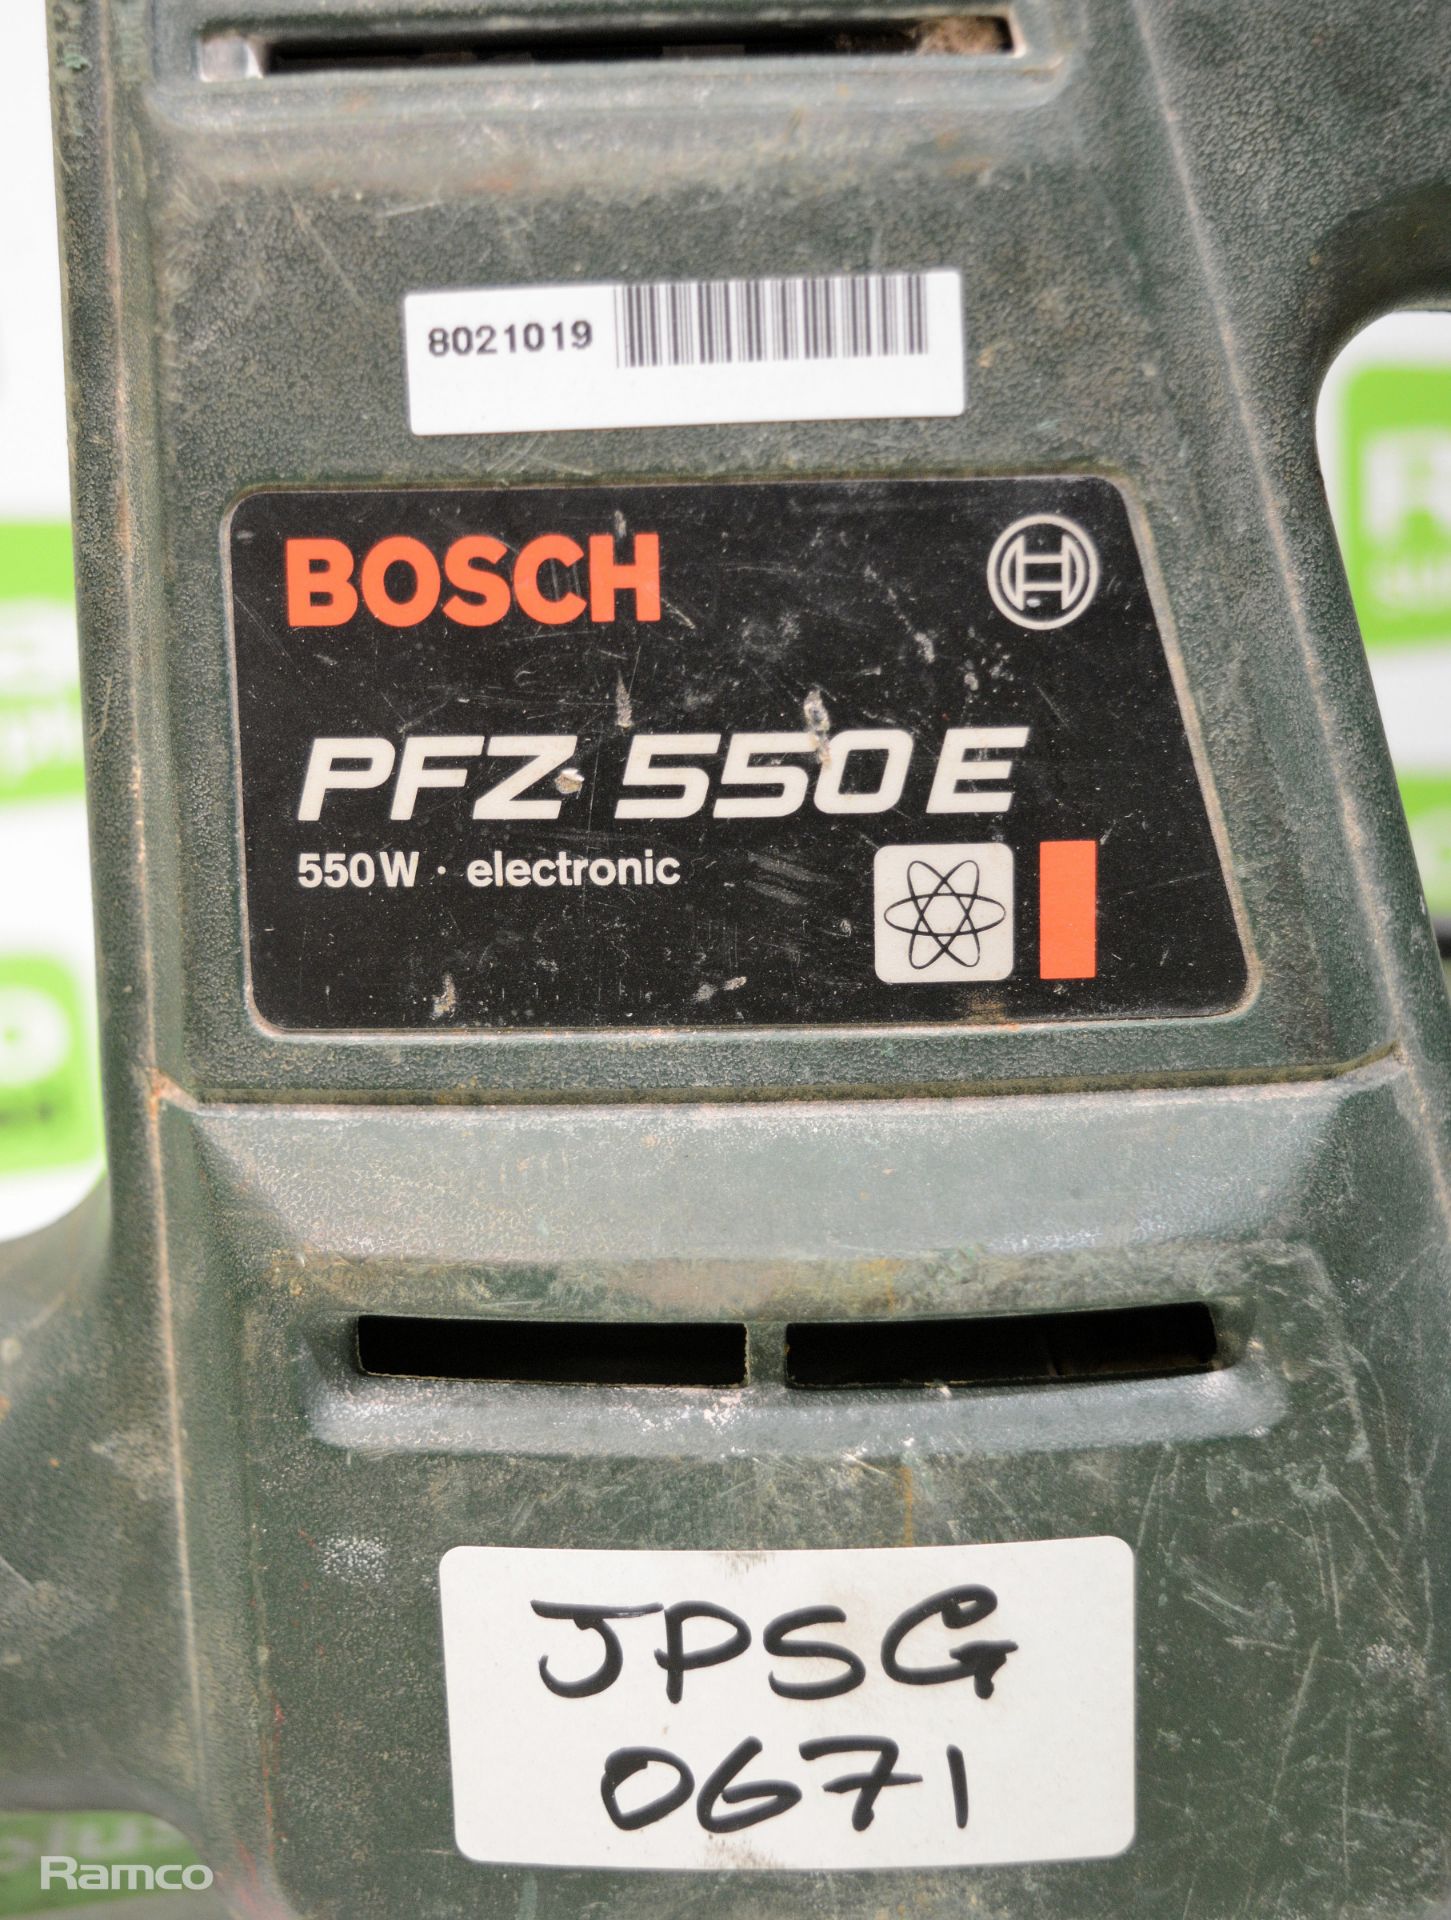 Bosch PFZ 550E electric reciprocating saw 230v - Image 2 of 4